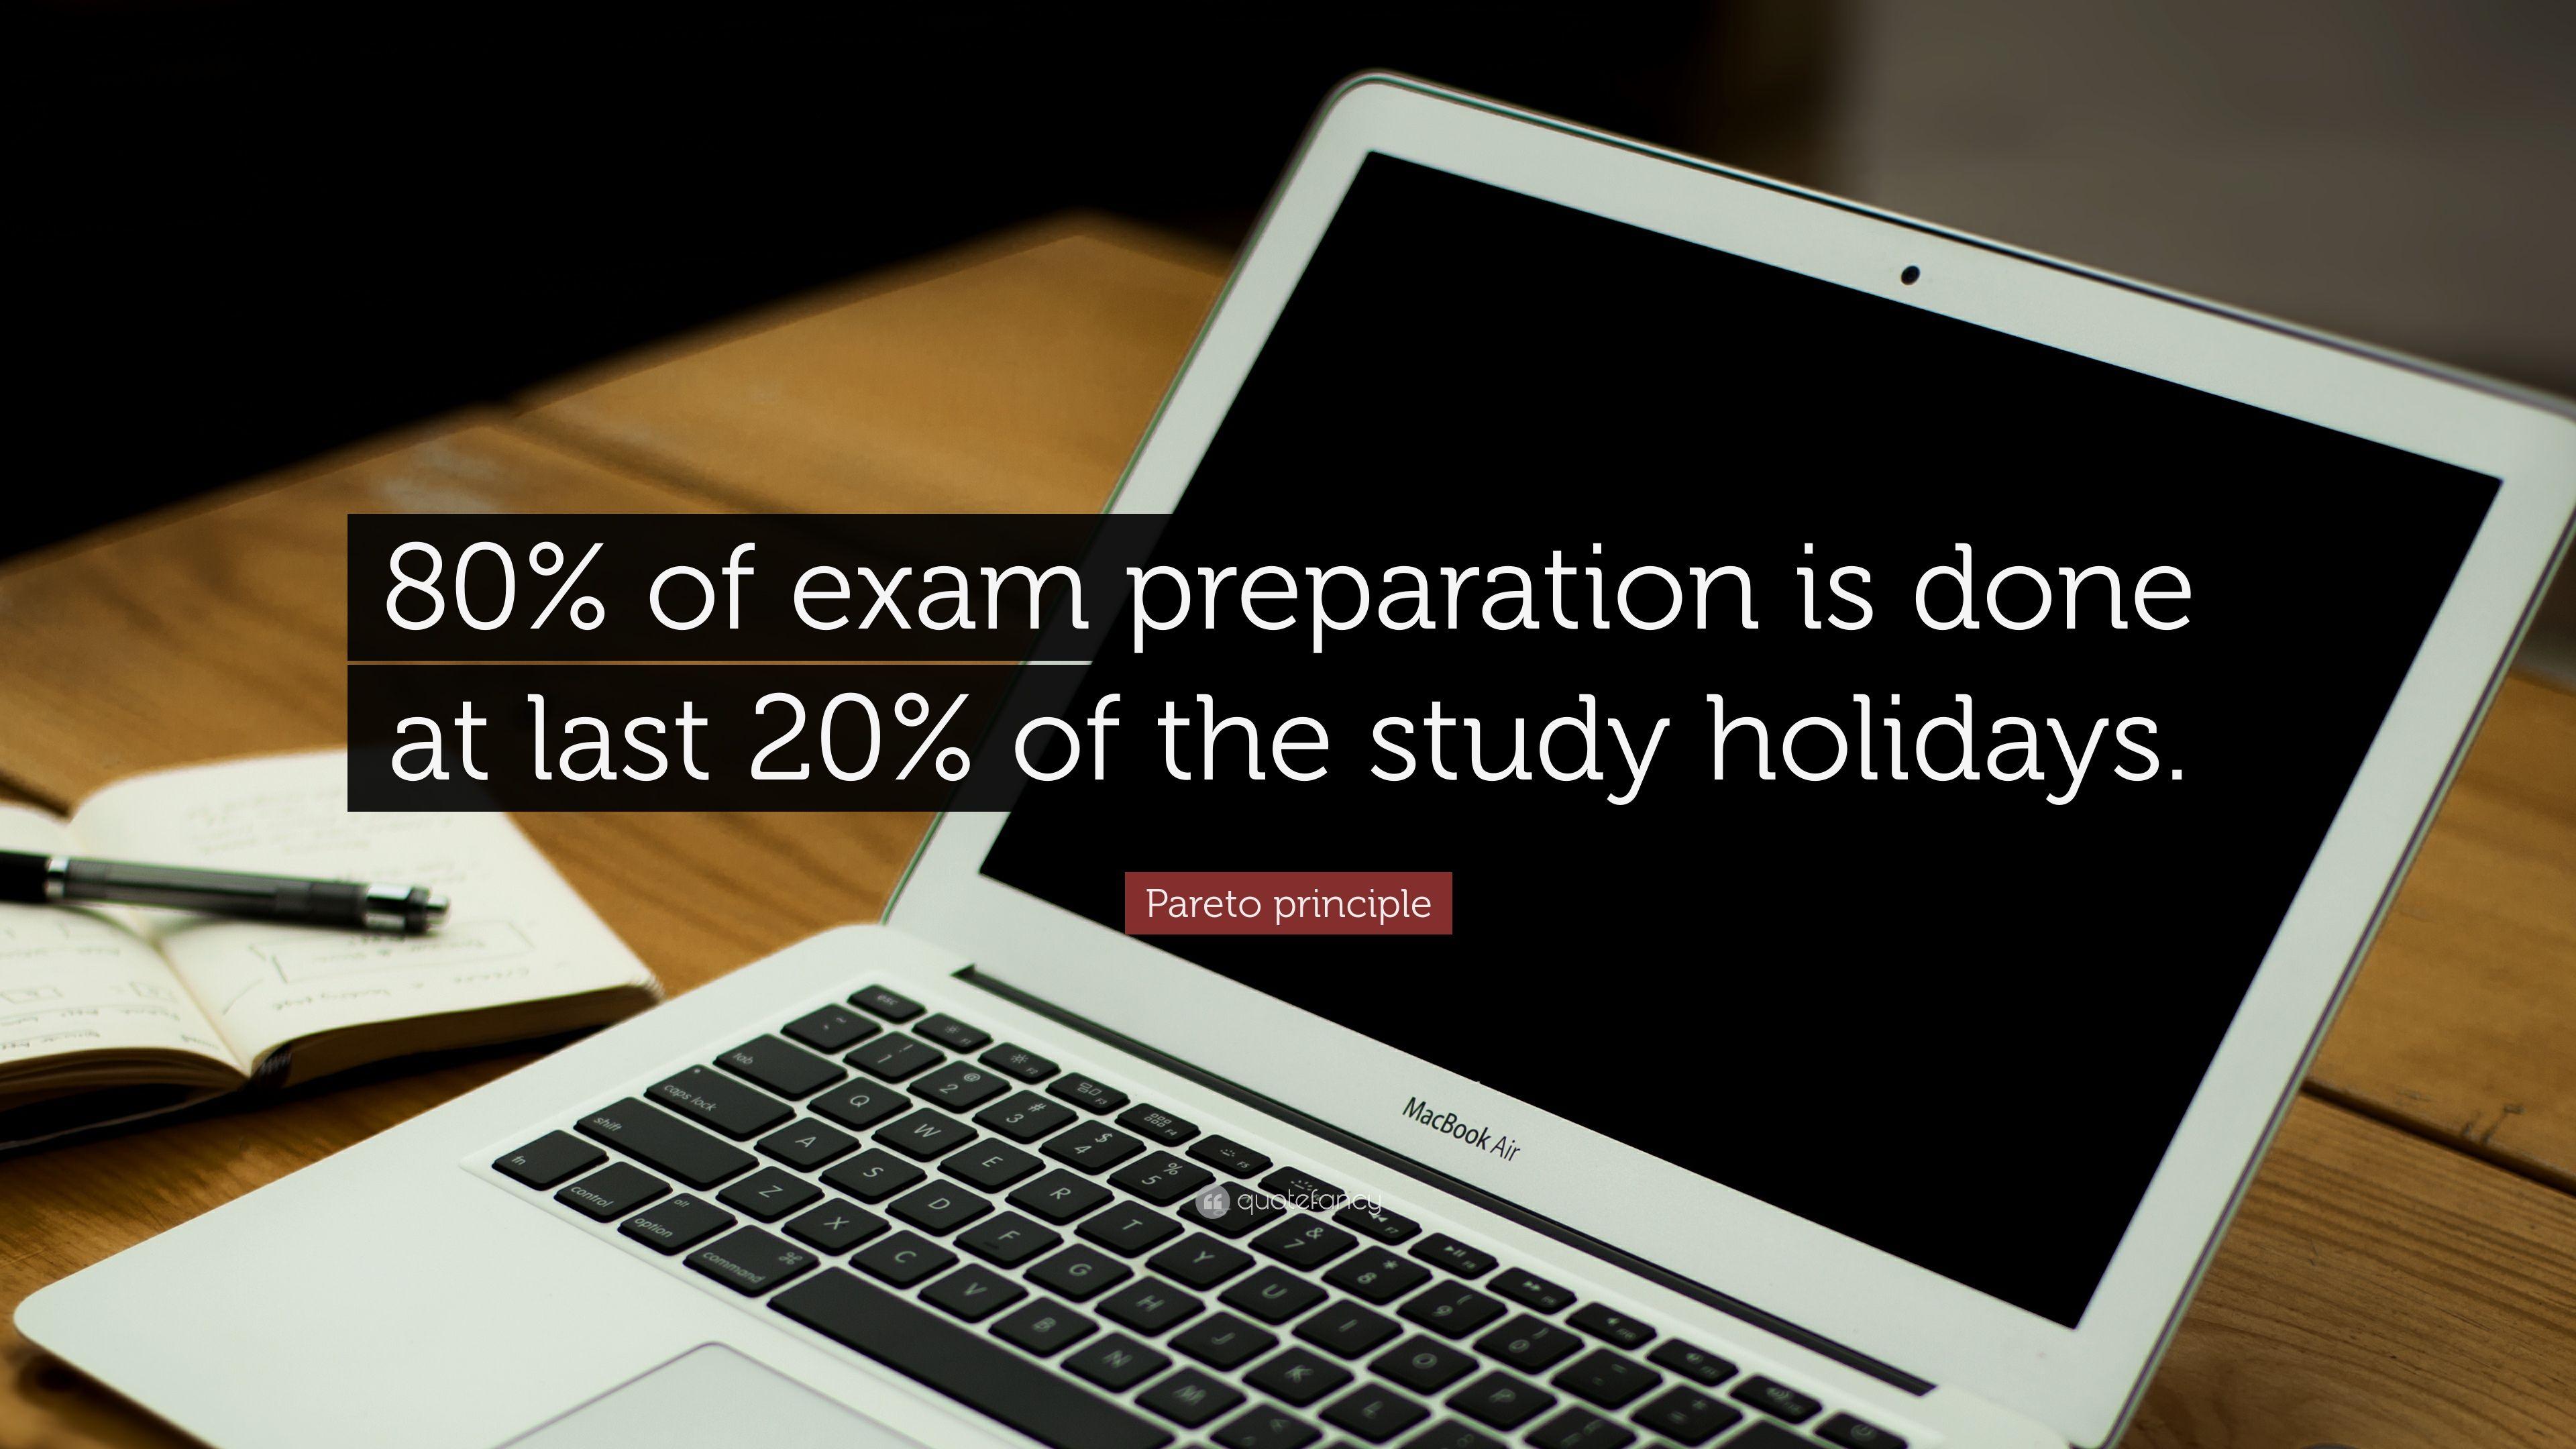 Pareto principle Quote: “80% of exam preparation is done at last 20